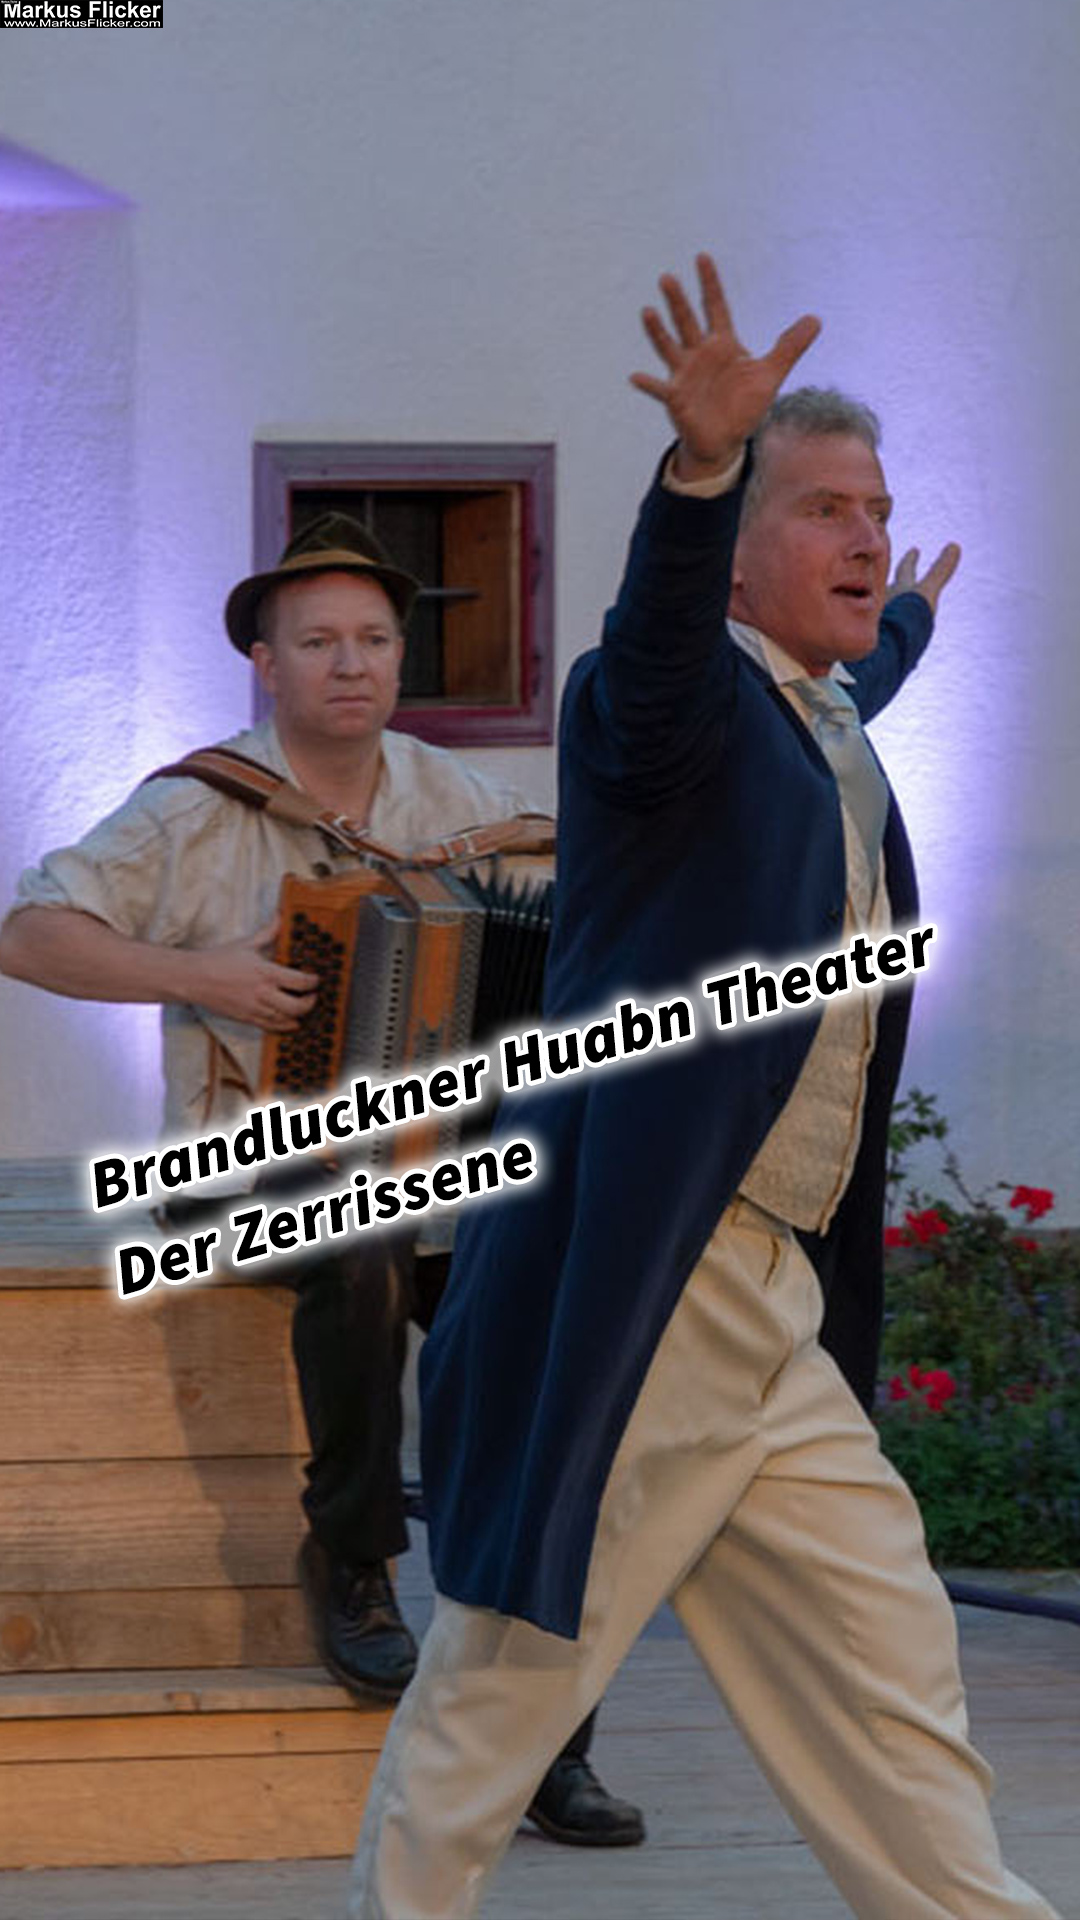 Brandluckner Huabn Theater Der Zerrissene